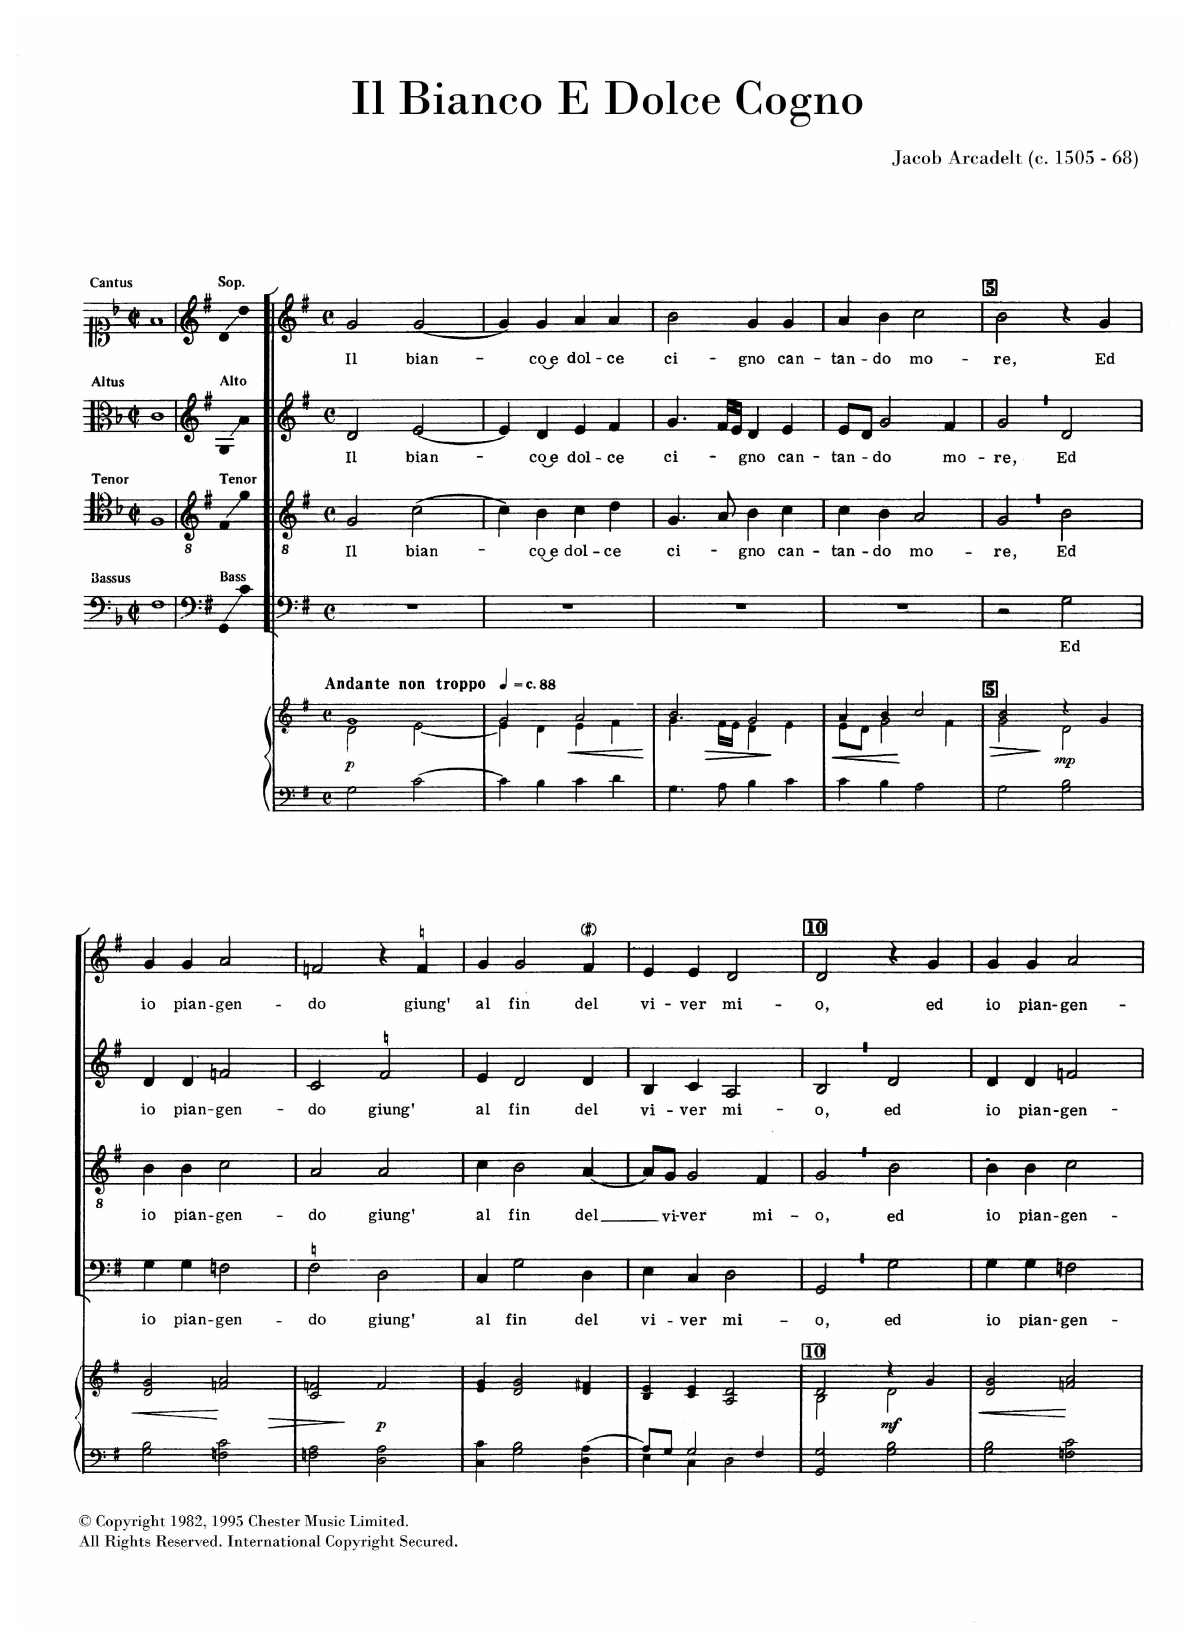 Jacob Arcadelt Il Bianco E Dolce Cigno Sheet Music Notes & Chords for SATB Choir - Download or Print PDF